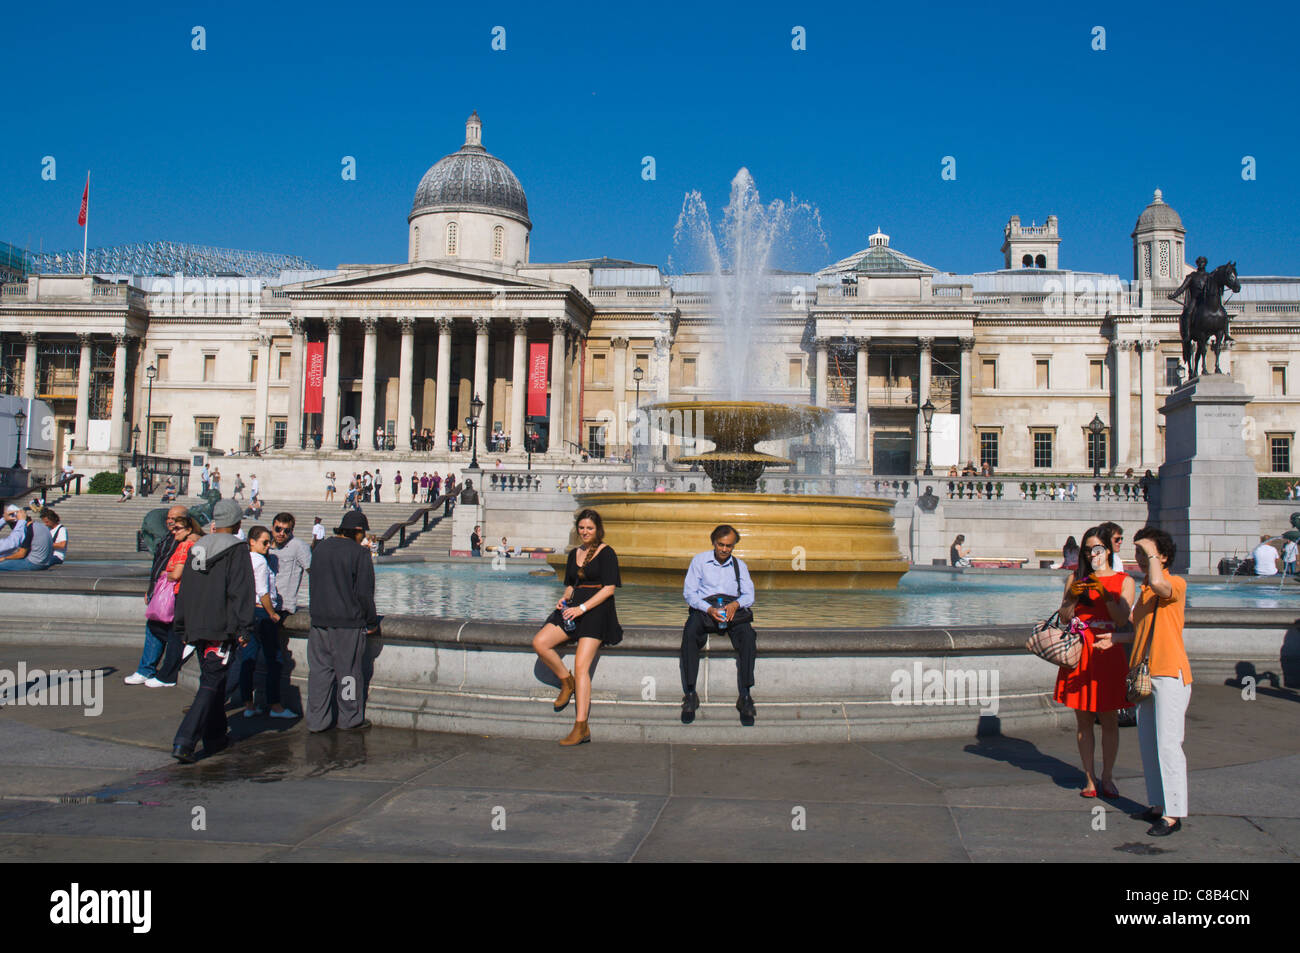 Trafalgar Square central London England UK Europe Stock Photo